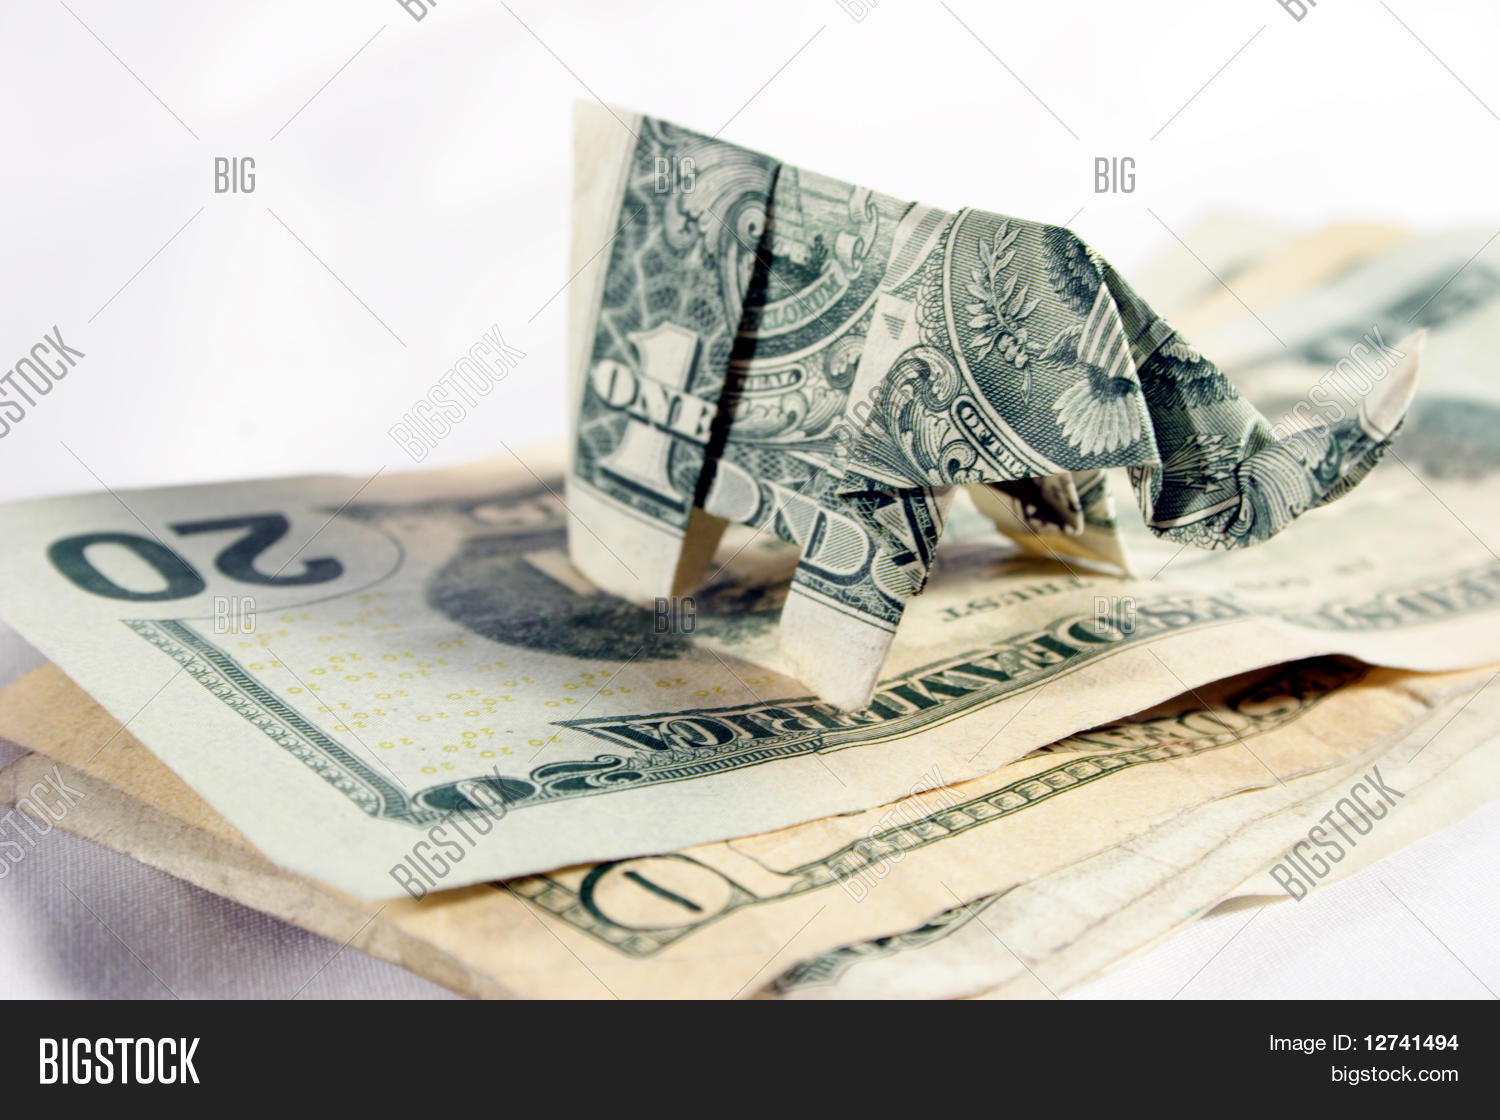 Money Origami Elephant Origami Elephant Image Photo Free Trial Bigstock